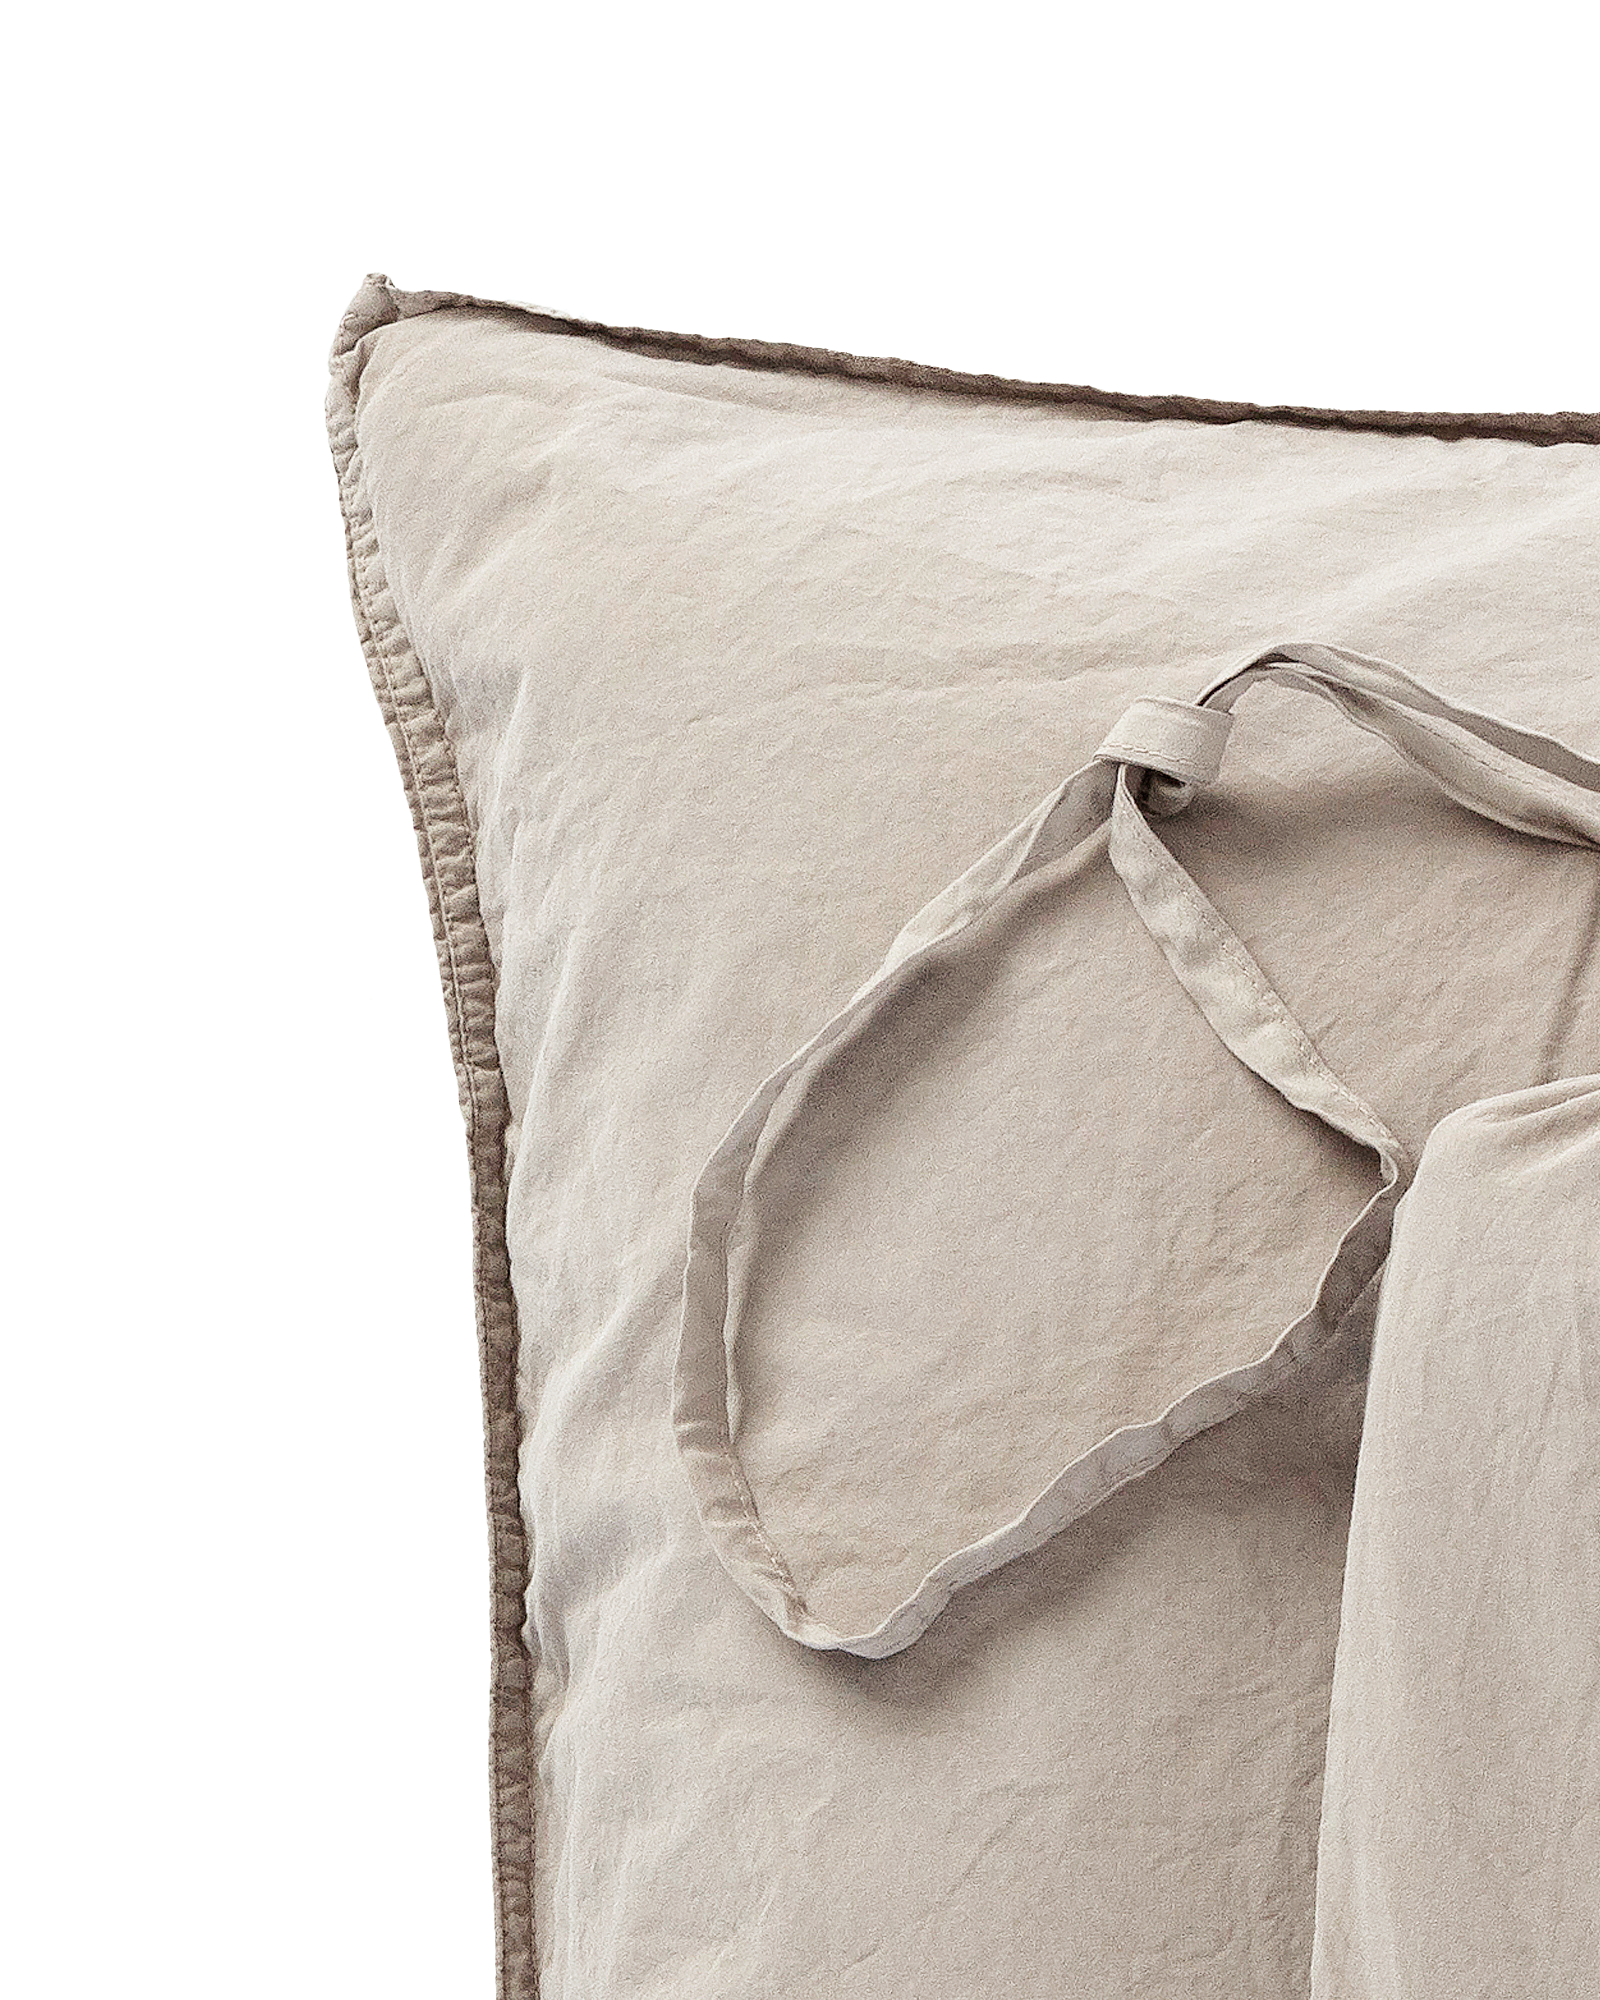 MARIE-MARIE - Pillowcase VINTAGE COTTON Granola - 65x65 cm - Granola